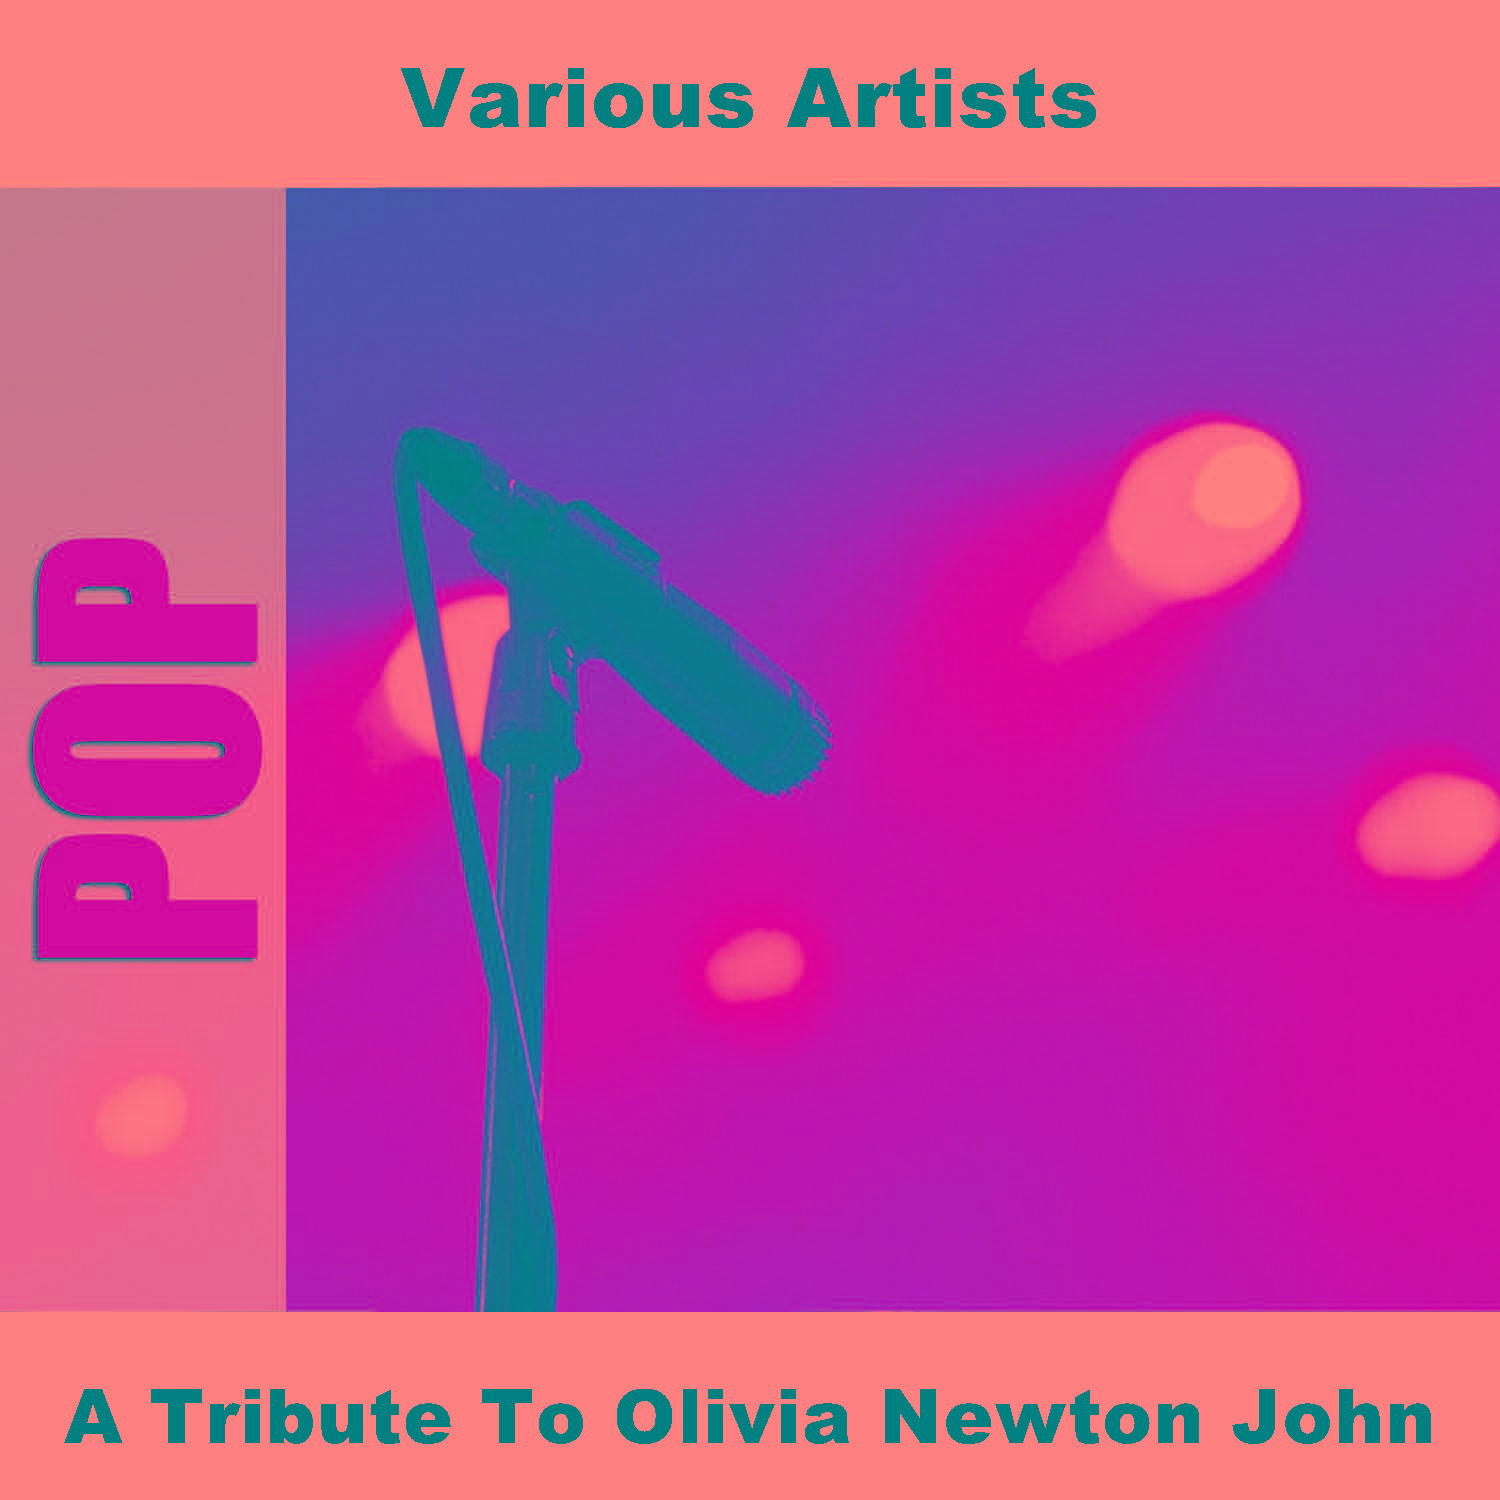 A Tribute To Olivia Newton John